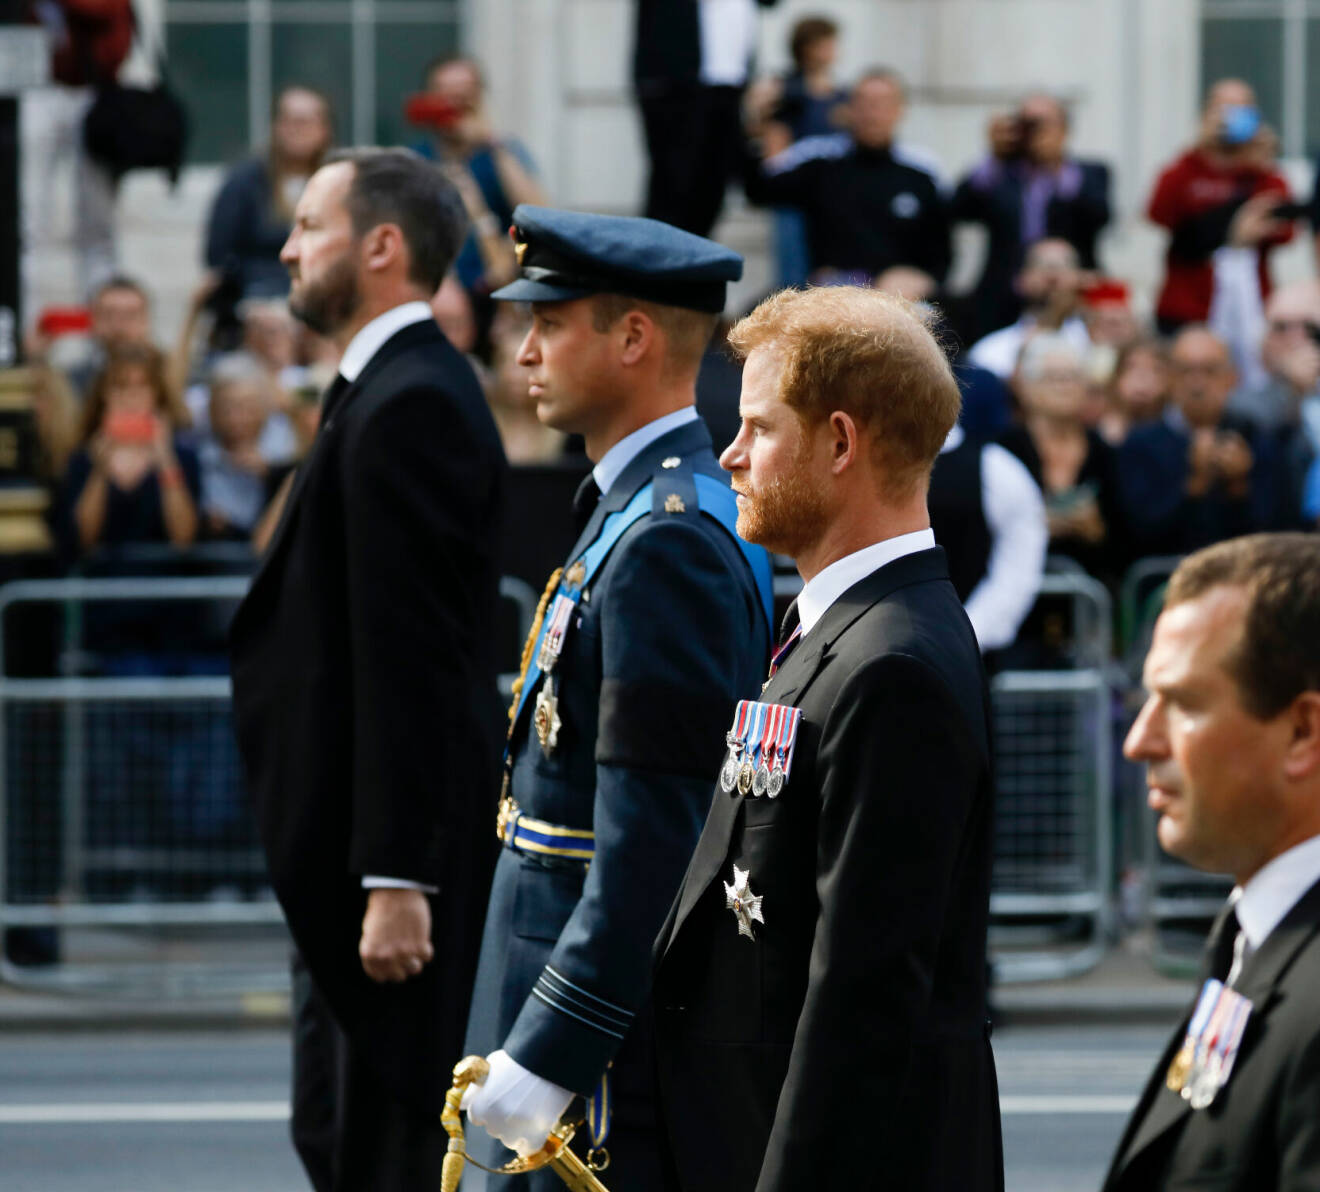 Prins William och prins Harry i procession efter drottning Elizabeths kista